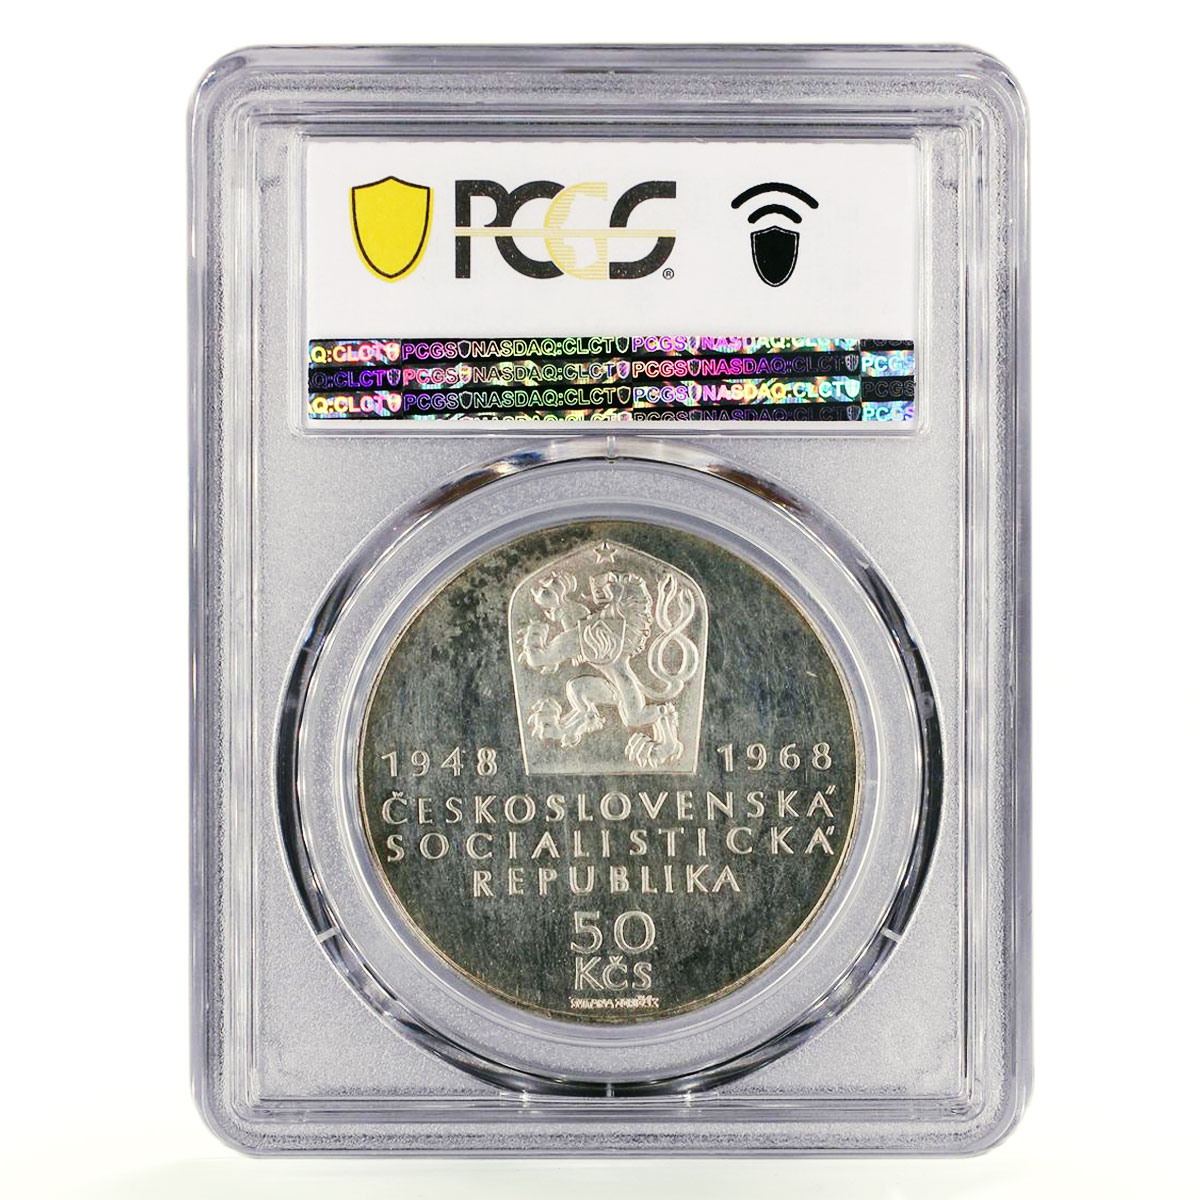 Czechoslovakia 50 korun 50th Jubilee of Independence PR62 PCGS silver coin 1968